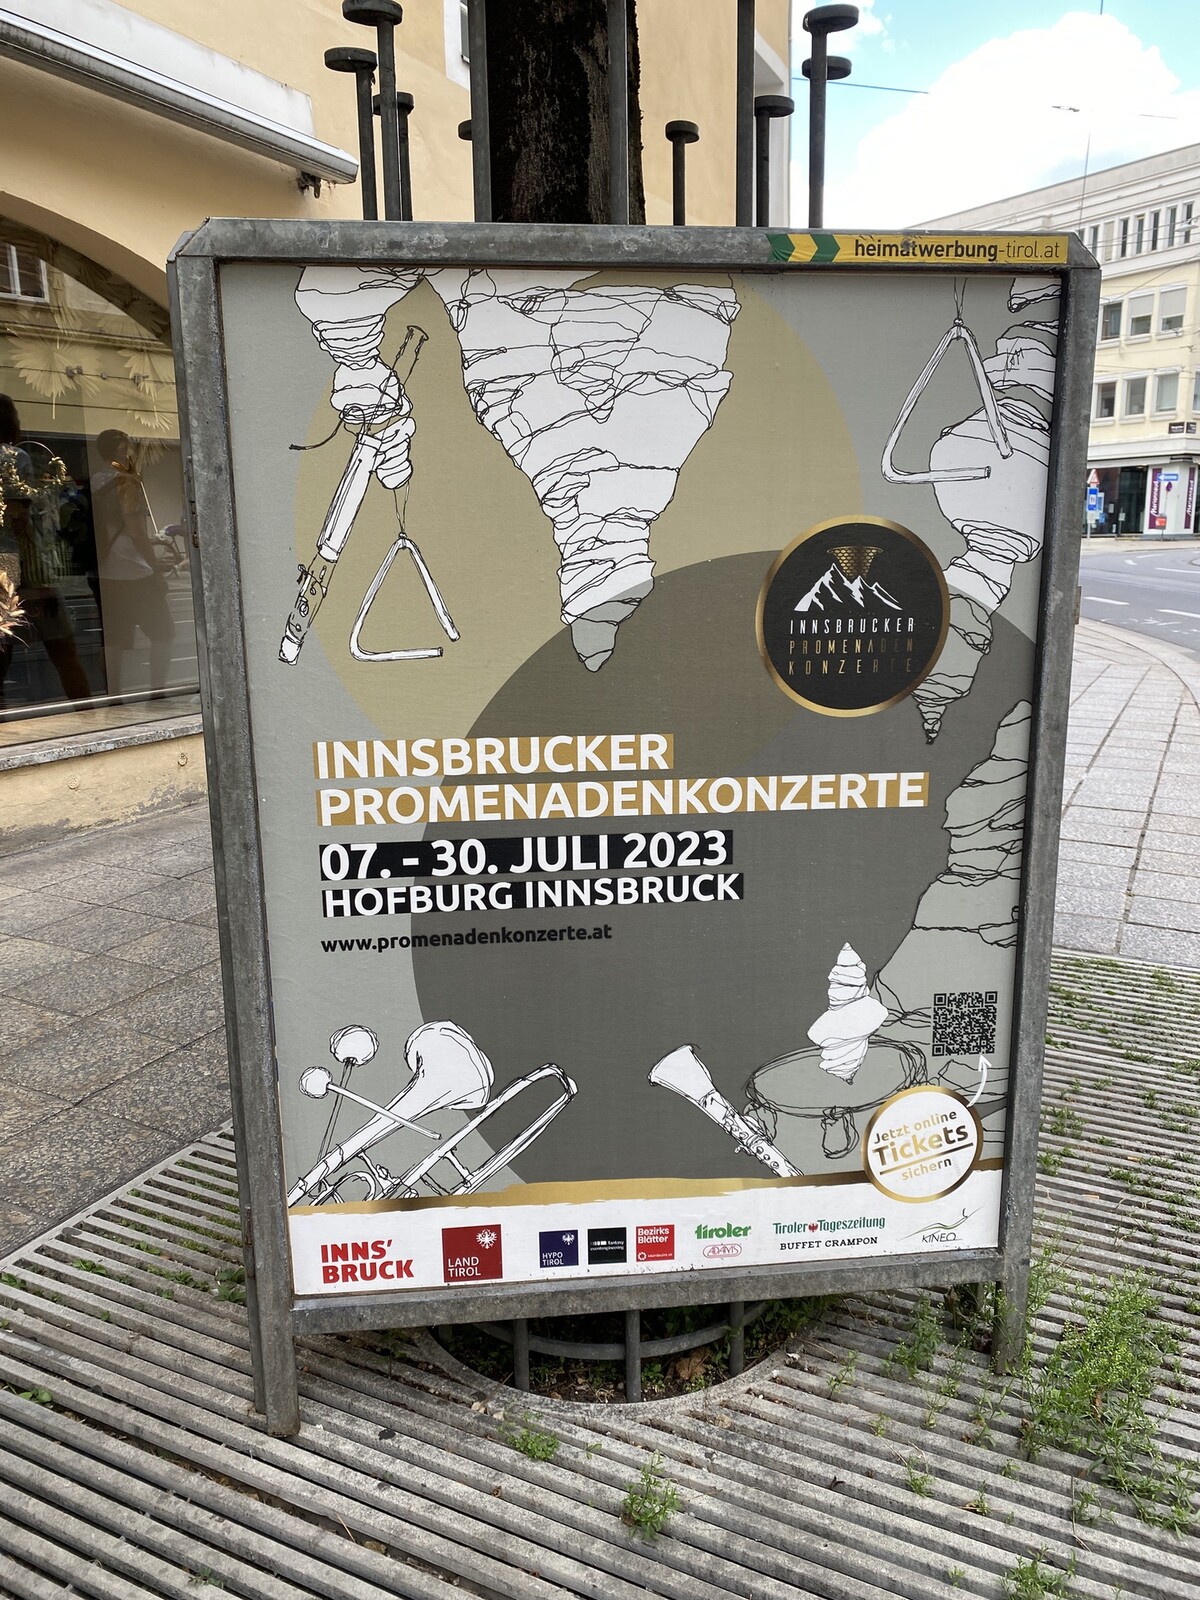 Innsbrucker Promenadenkonzerte 2023